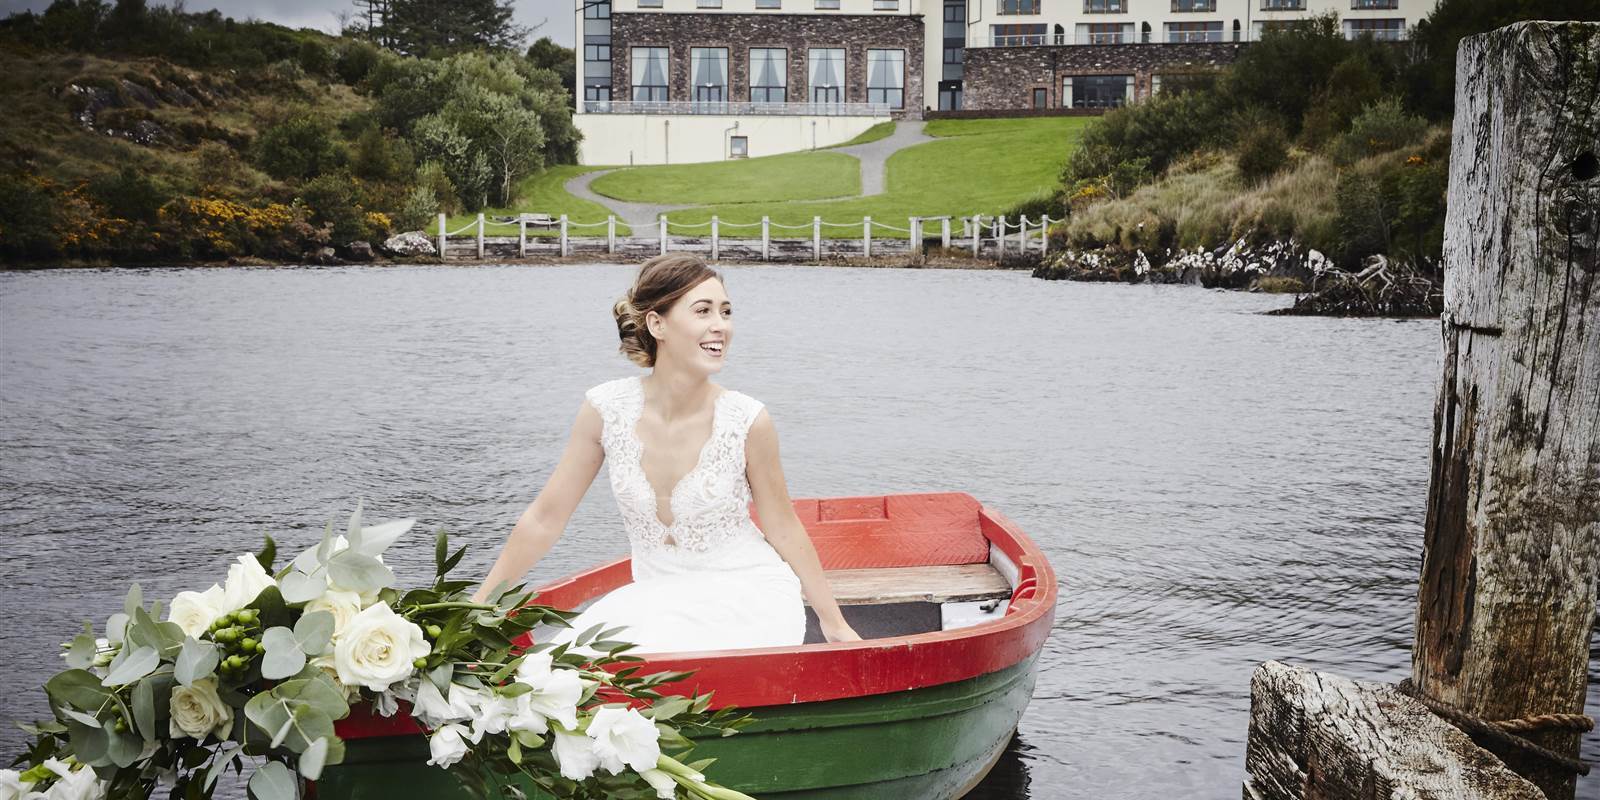 Sneem Bride Boat